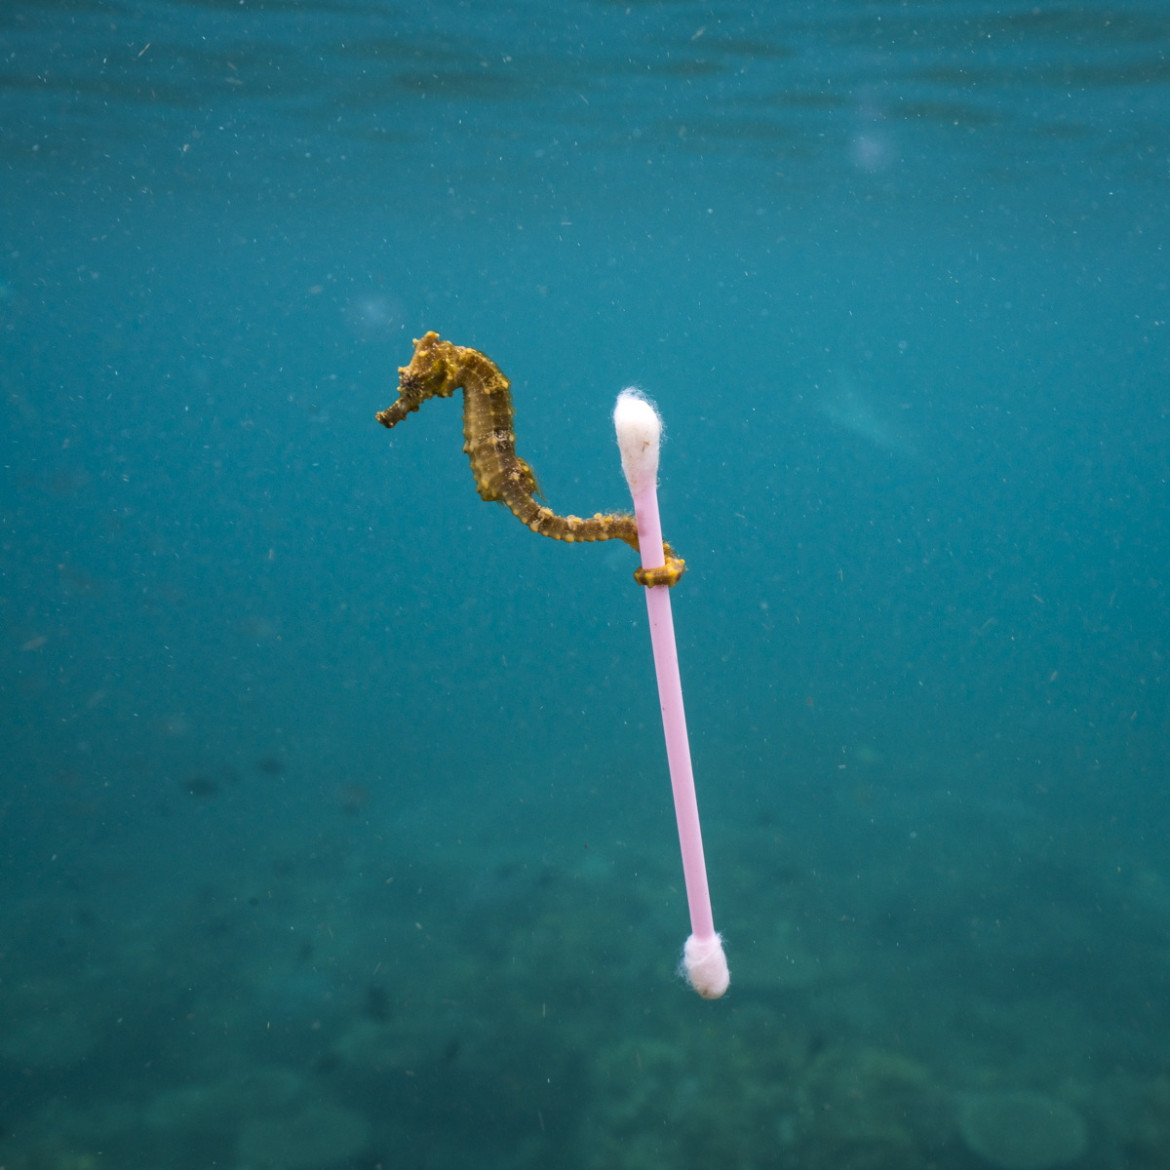 fot. Justin Hofman, "Sewage Surfer" / Wildlife Photographer of the Year 2017